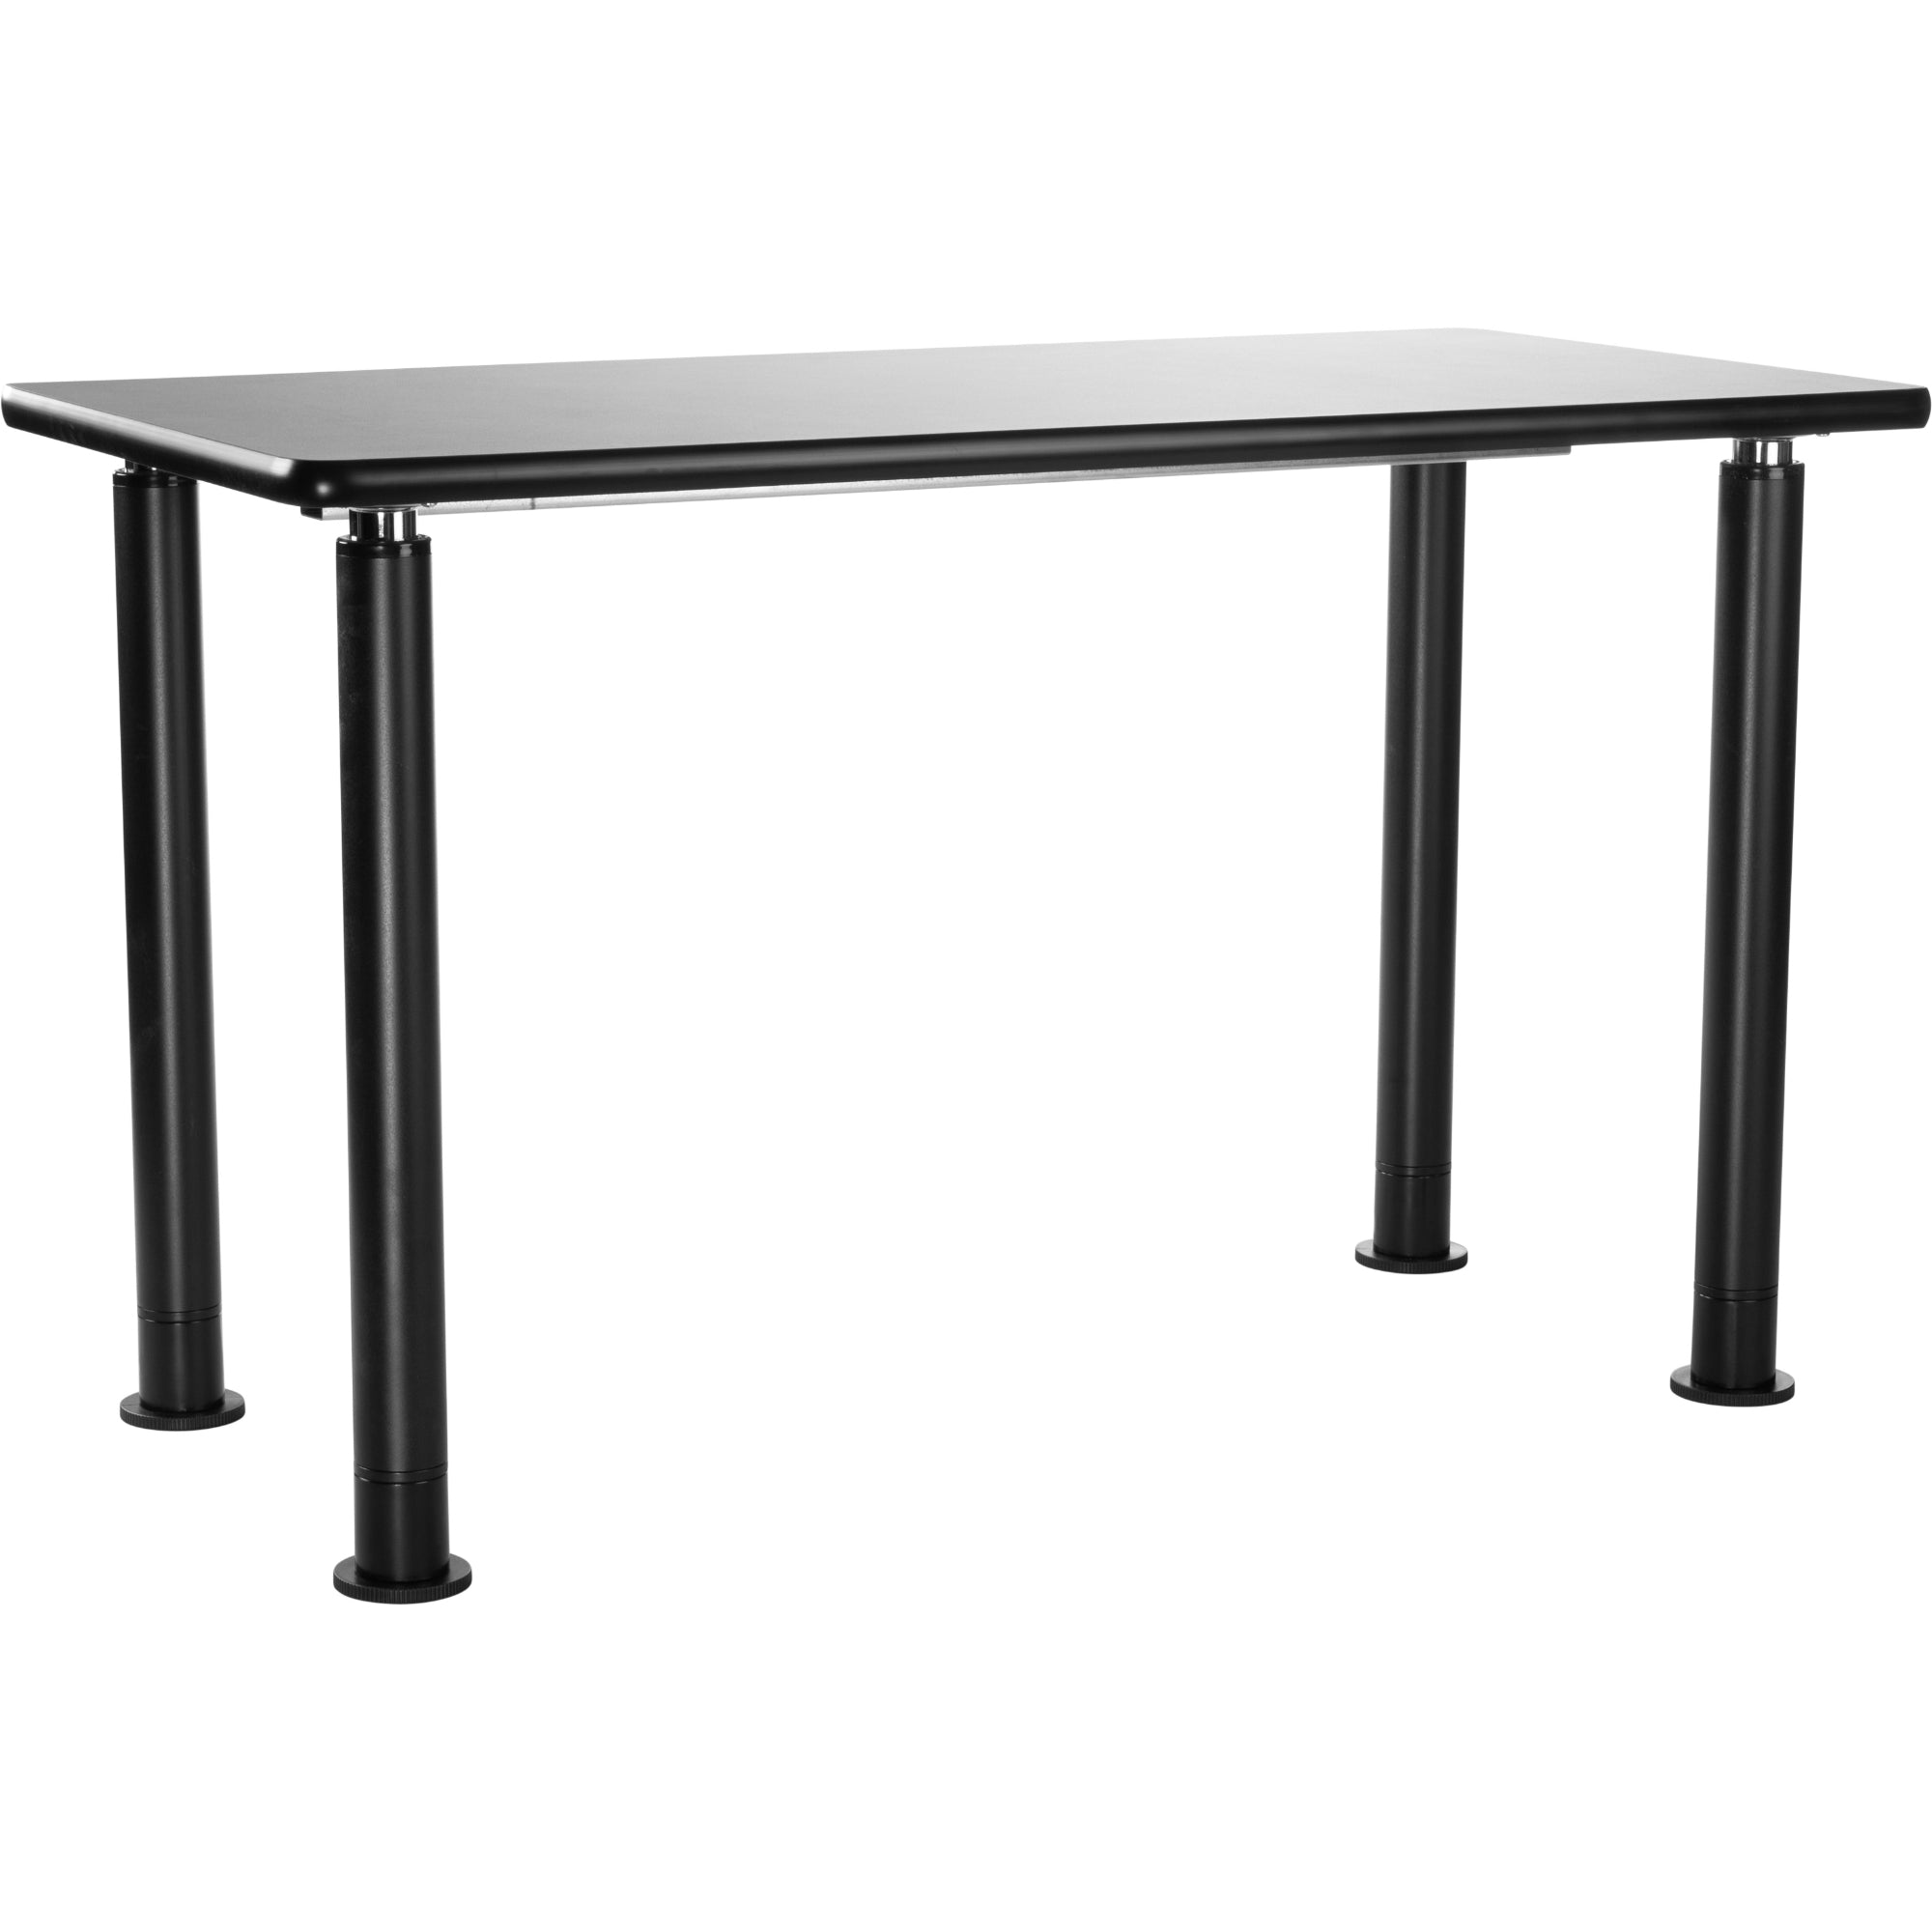 Designer Series Adjustable Height Science Table, 24" x 72" x 27"-42" H, High Pressure Laminate Top